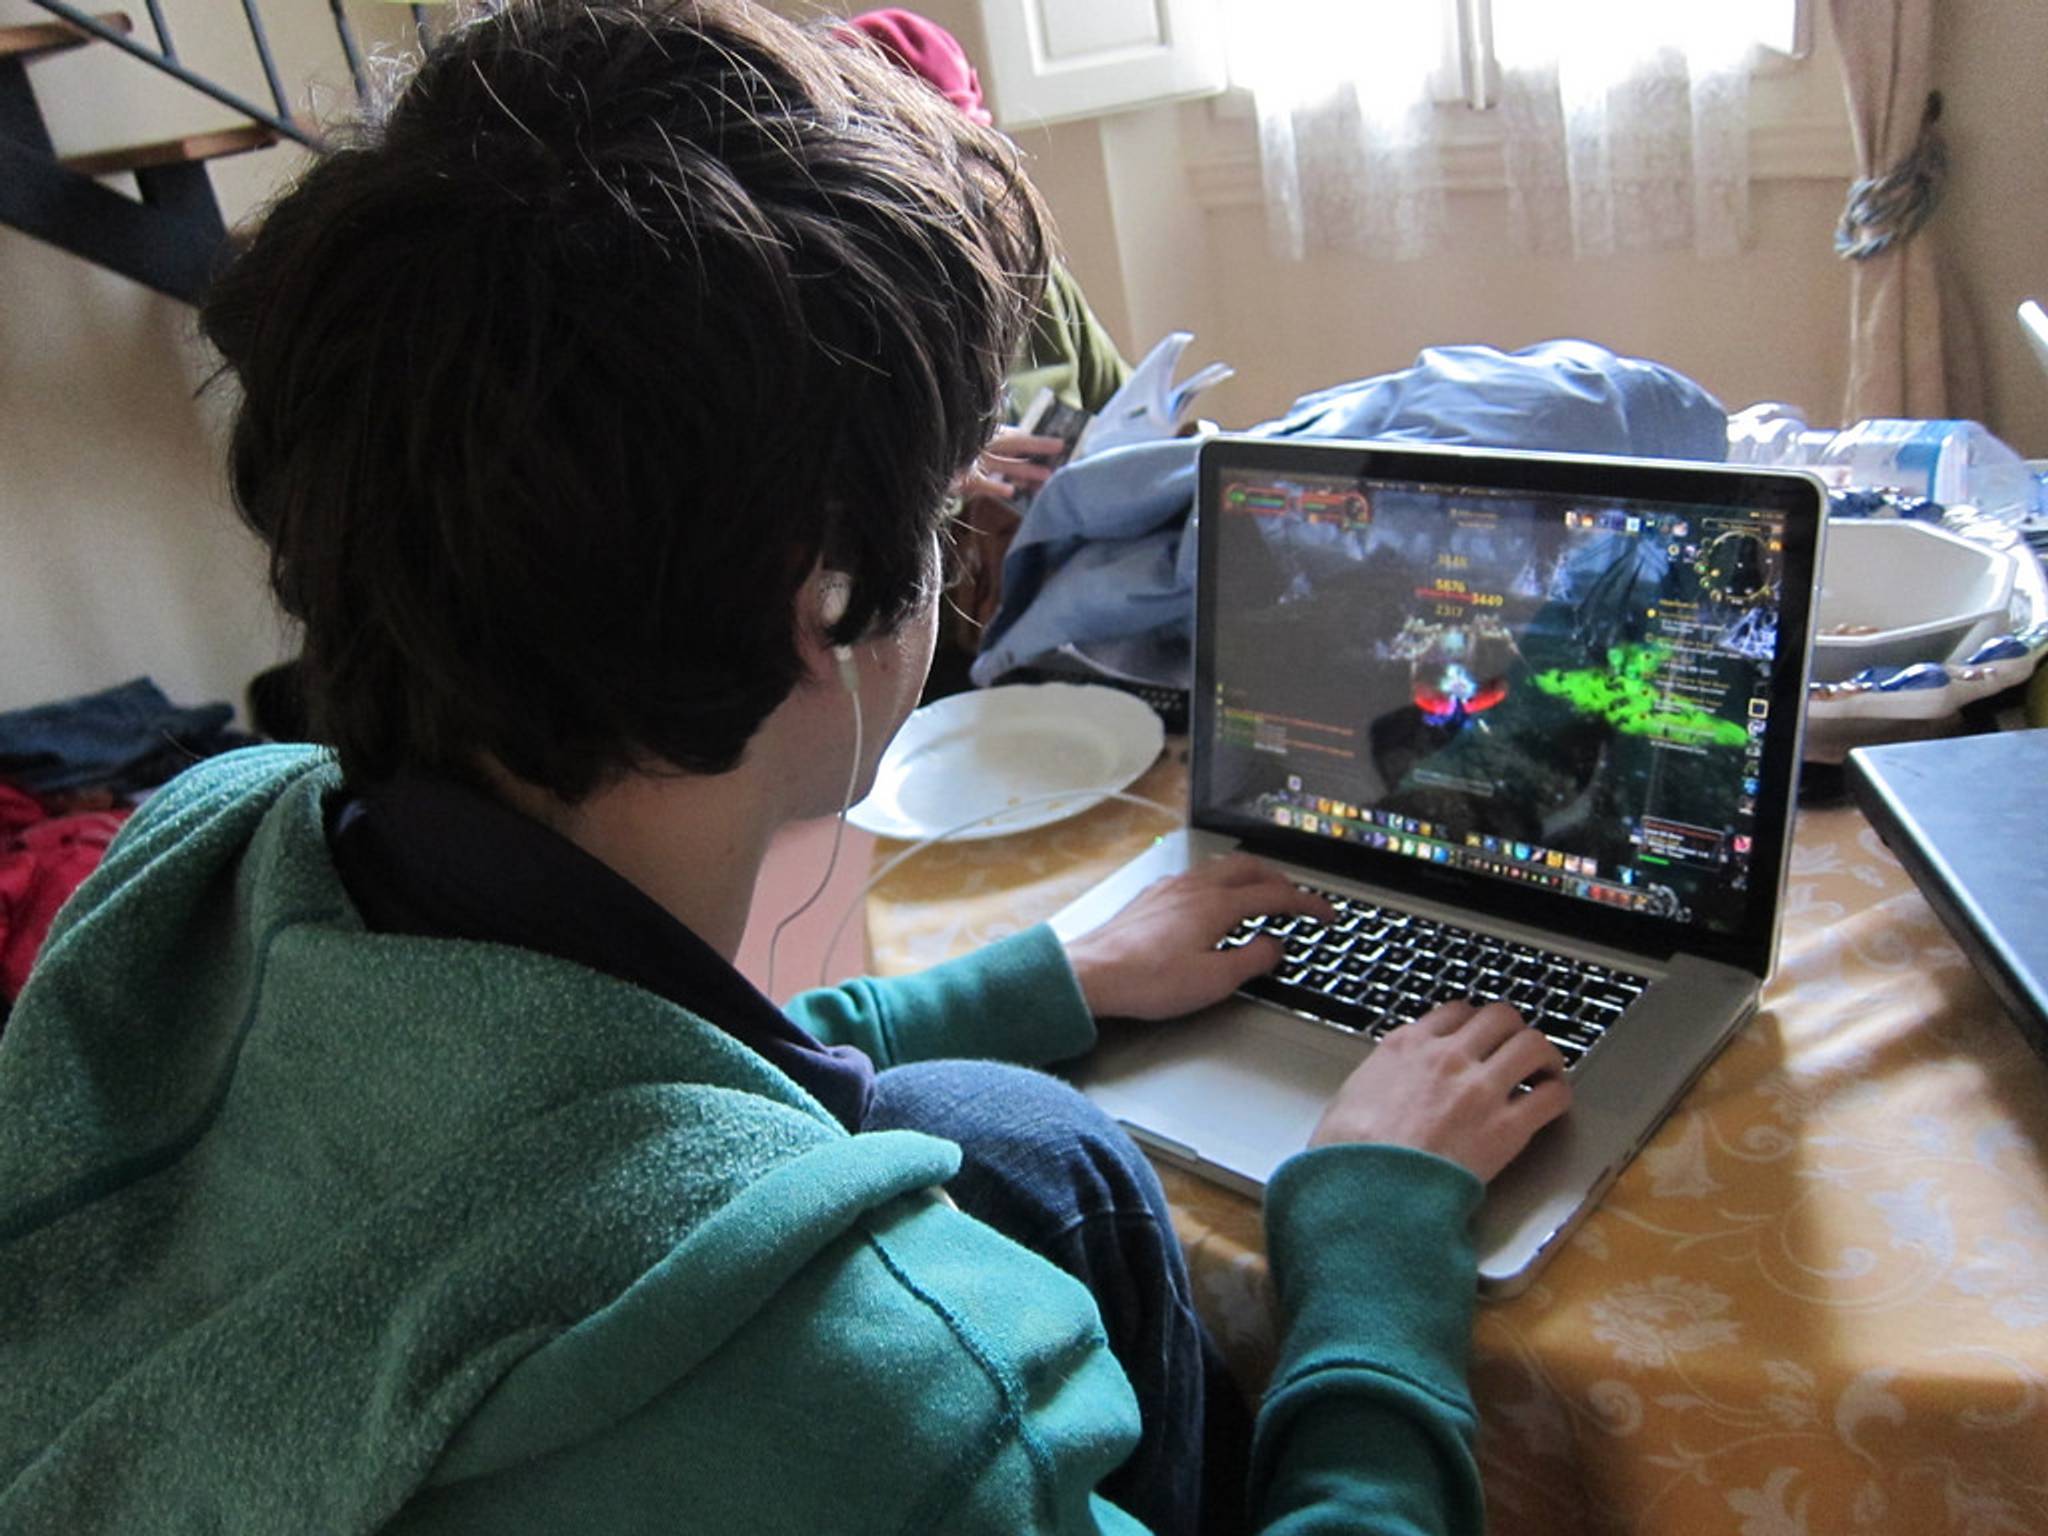 Video gaming could improve teens’ grades